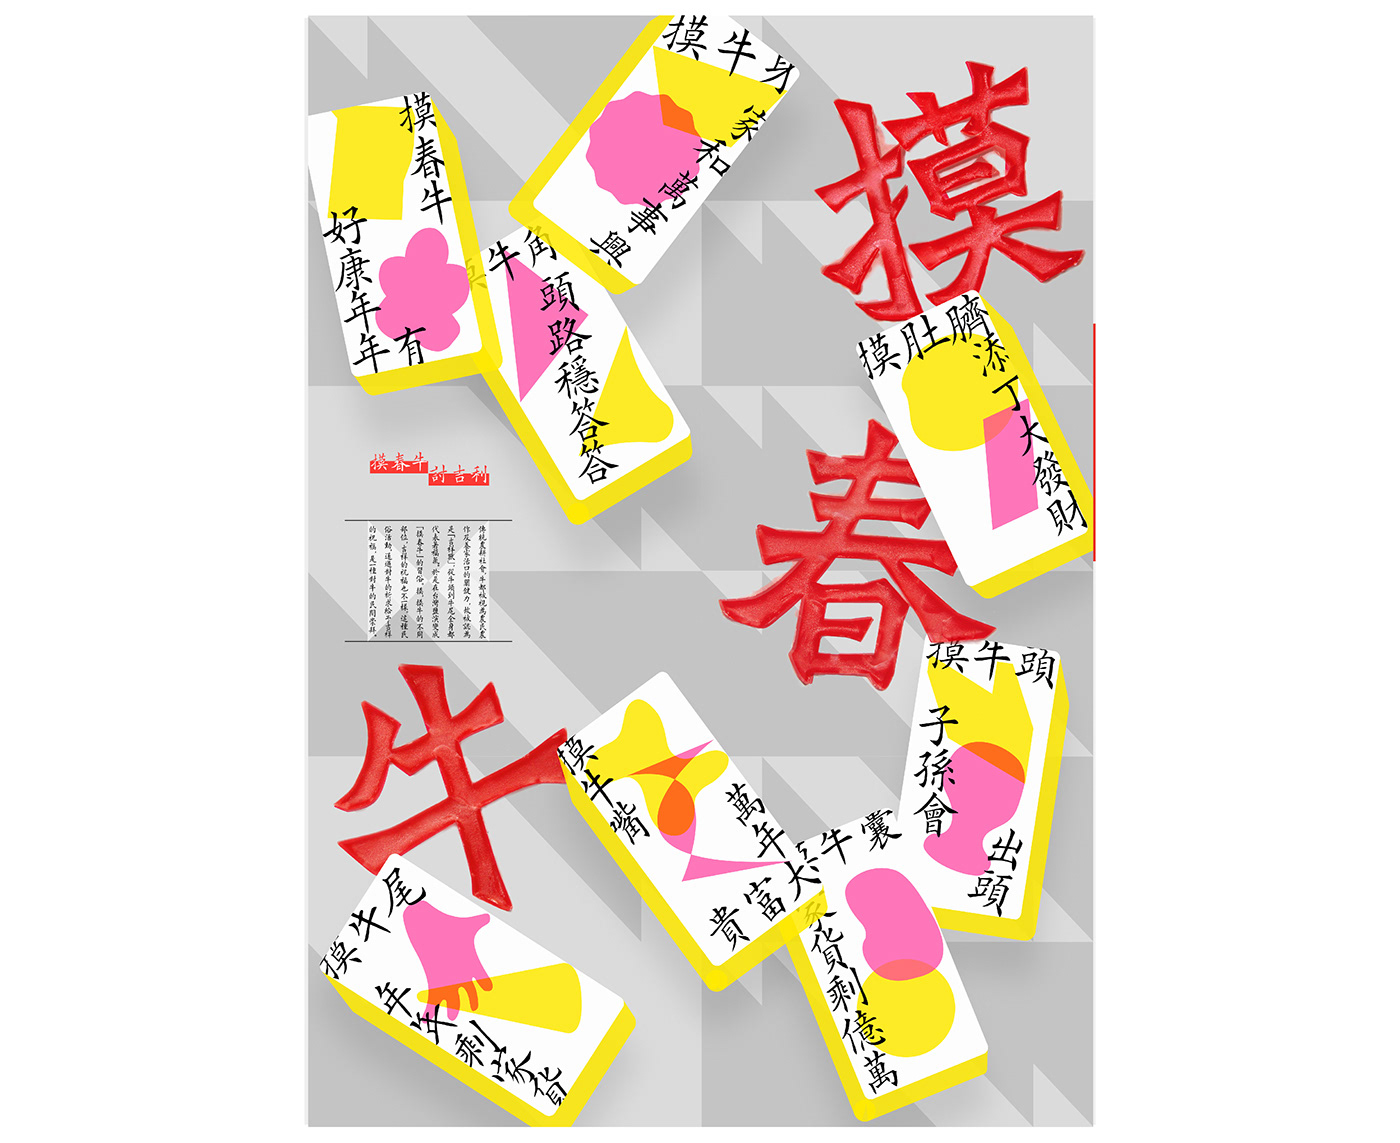 毕业设计 展览设计 adobeawards graduation project Exhibition Design  graphic design  平面设计 台湾 台湾文化 taiwan